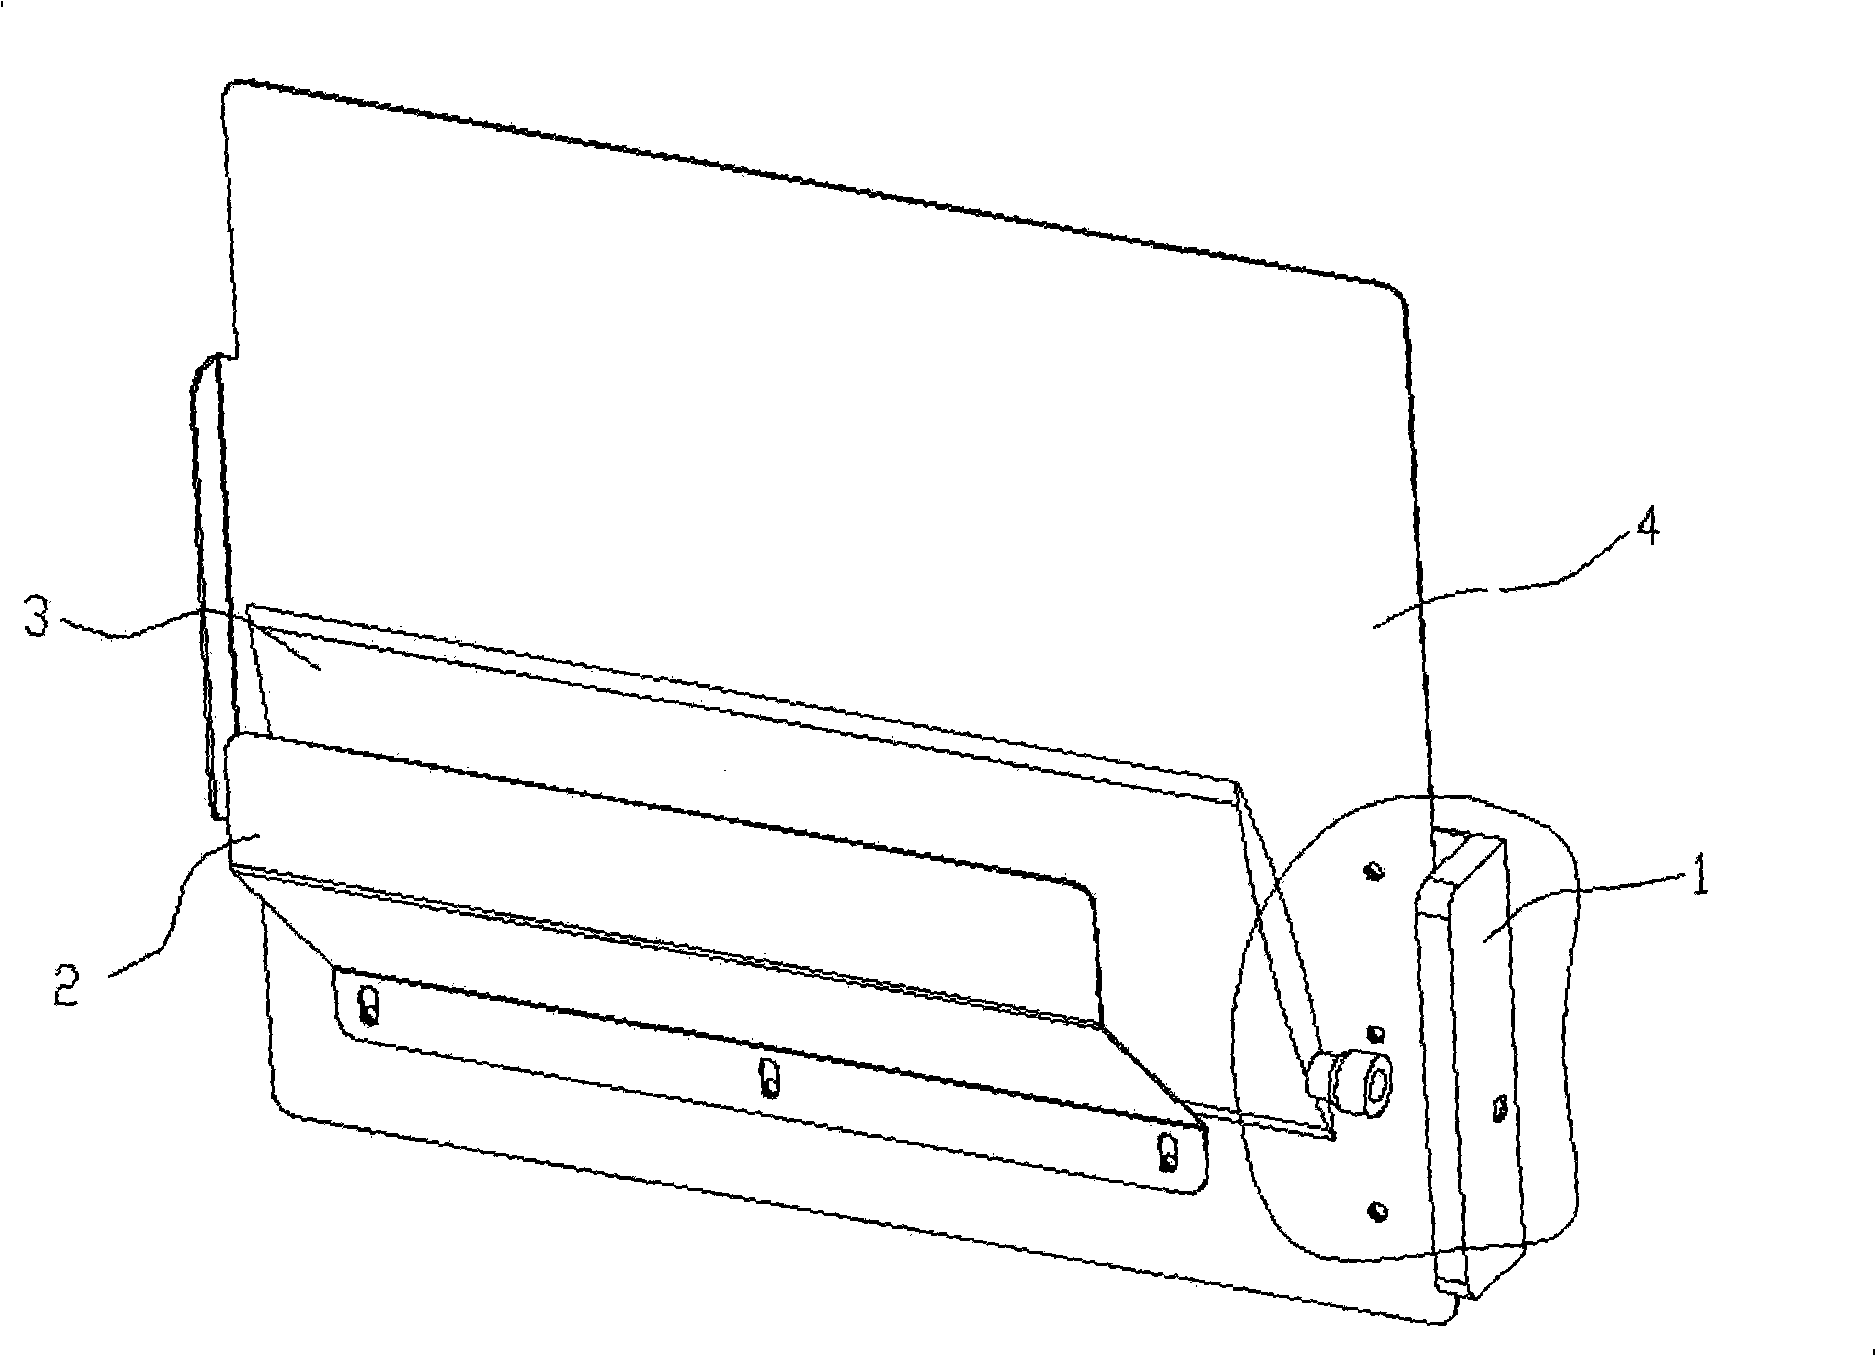 Printer ink supplying bracket and ink supplying frame and system